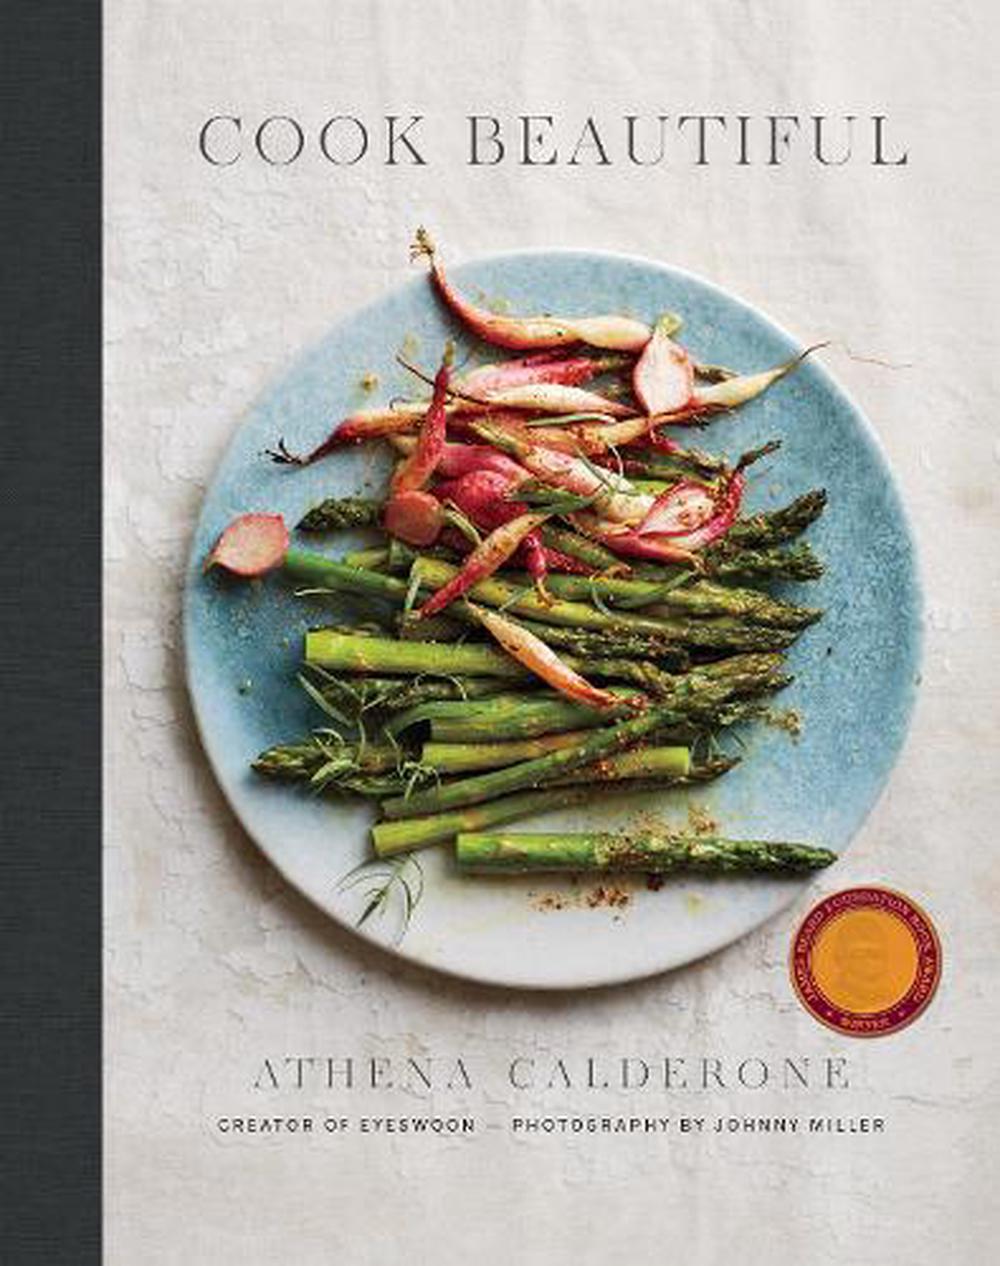 Cook Beautiful By Athena Calderone English Hardcover Book Free